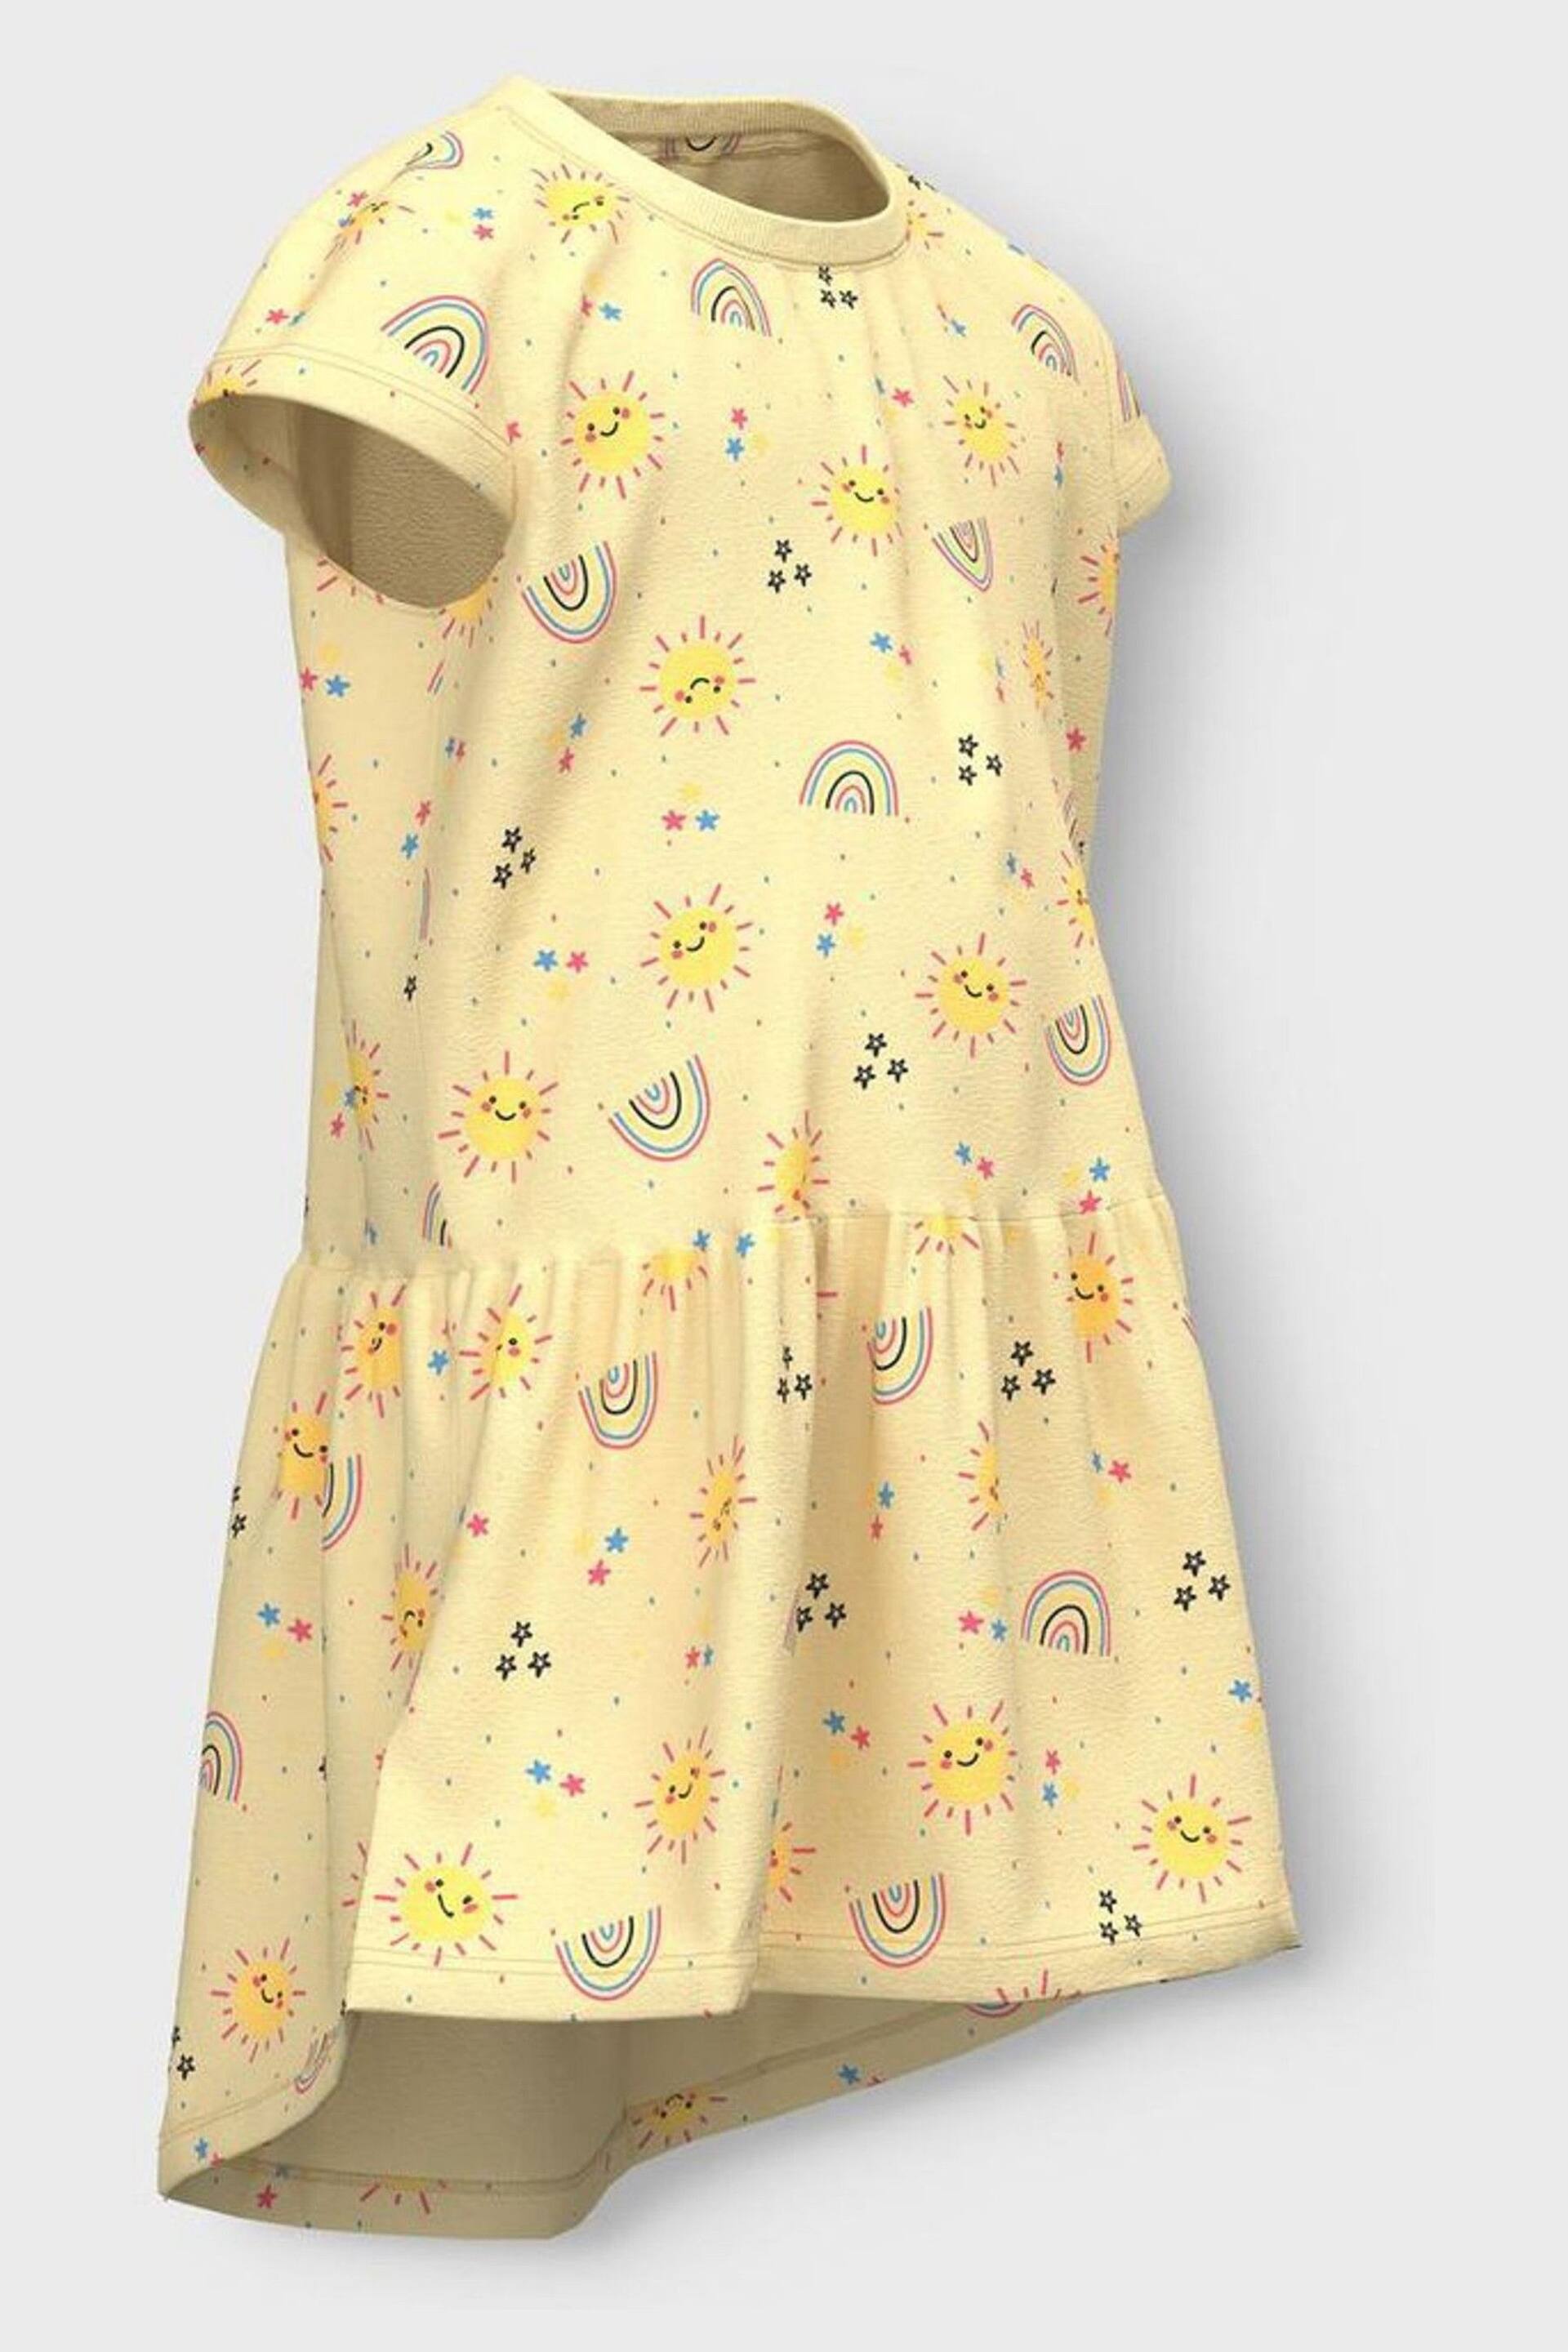 Name It Yellow Printed Dress - Image 3 of 3